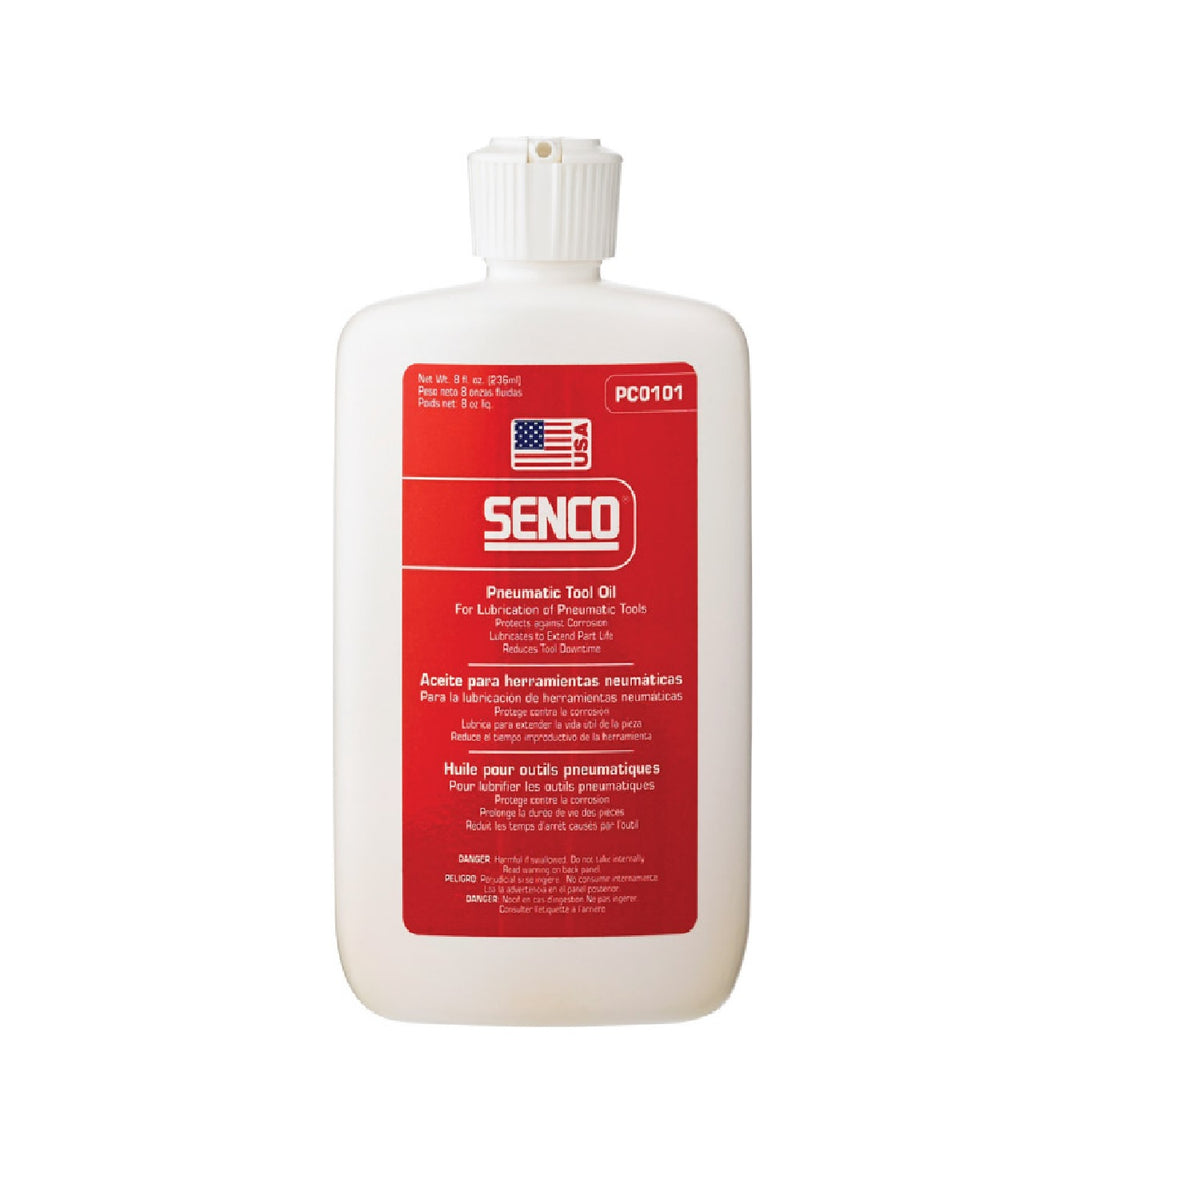 Senco PC0101 Pneumatic Tool Oil, 1/2 Pint